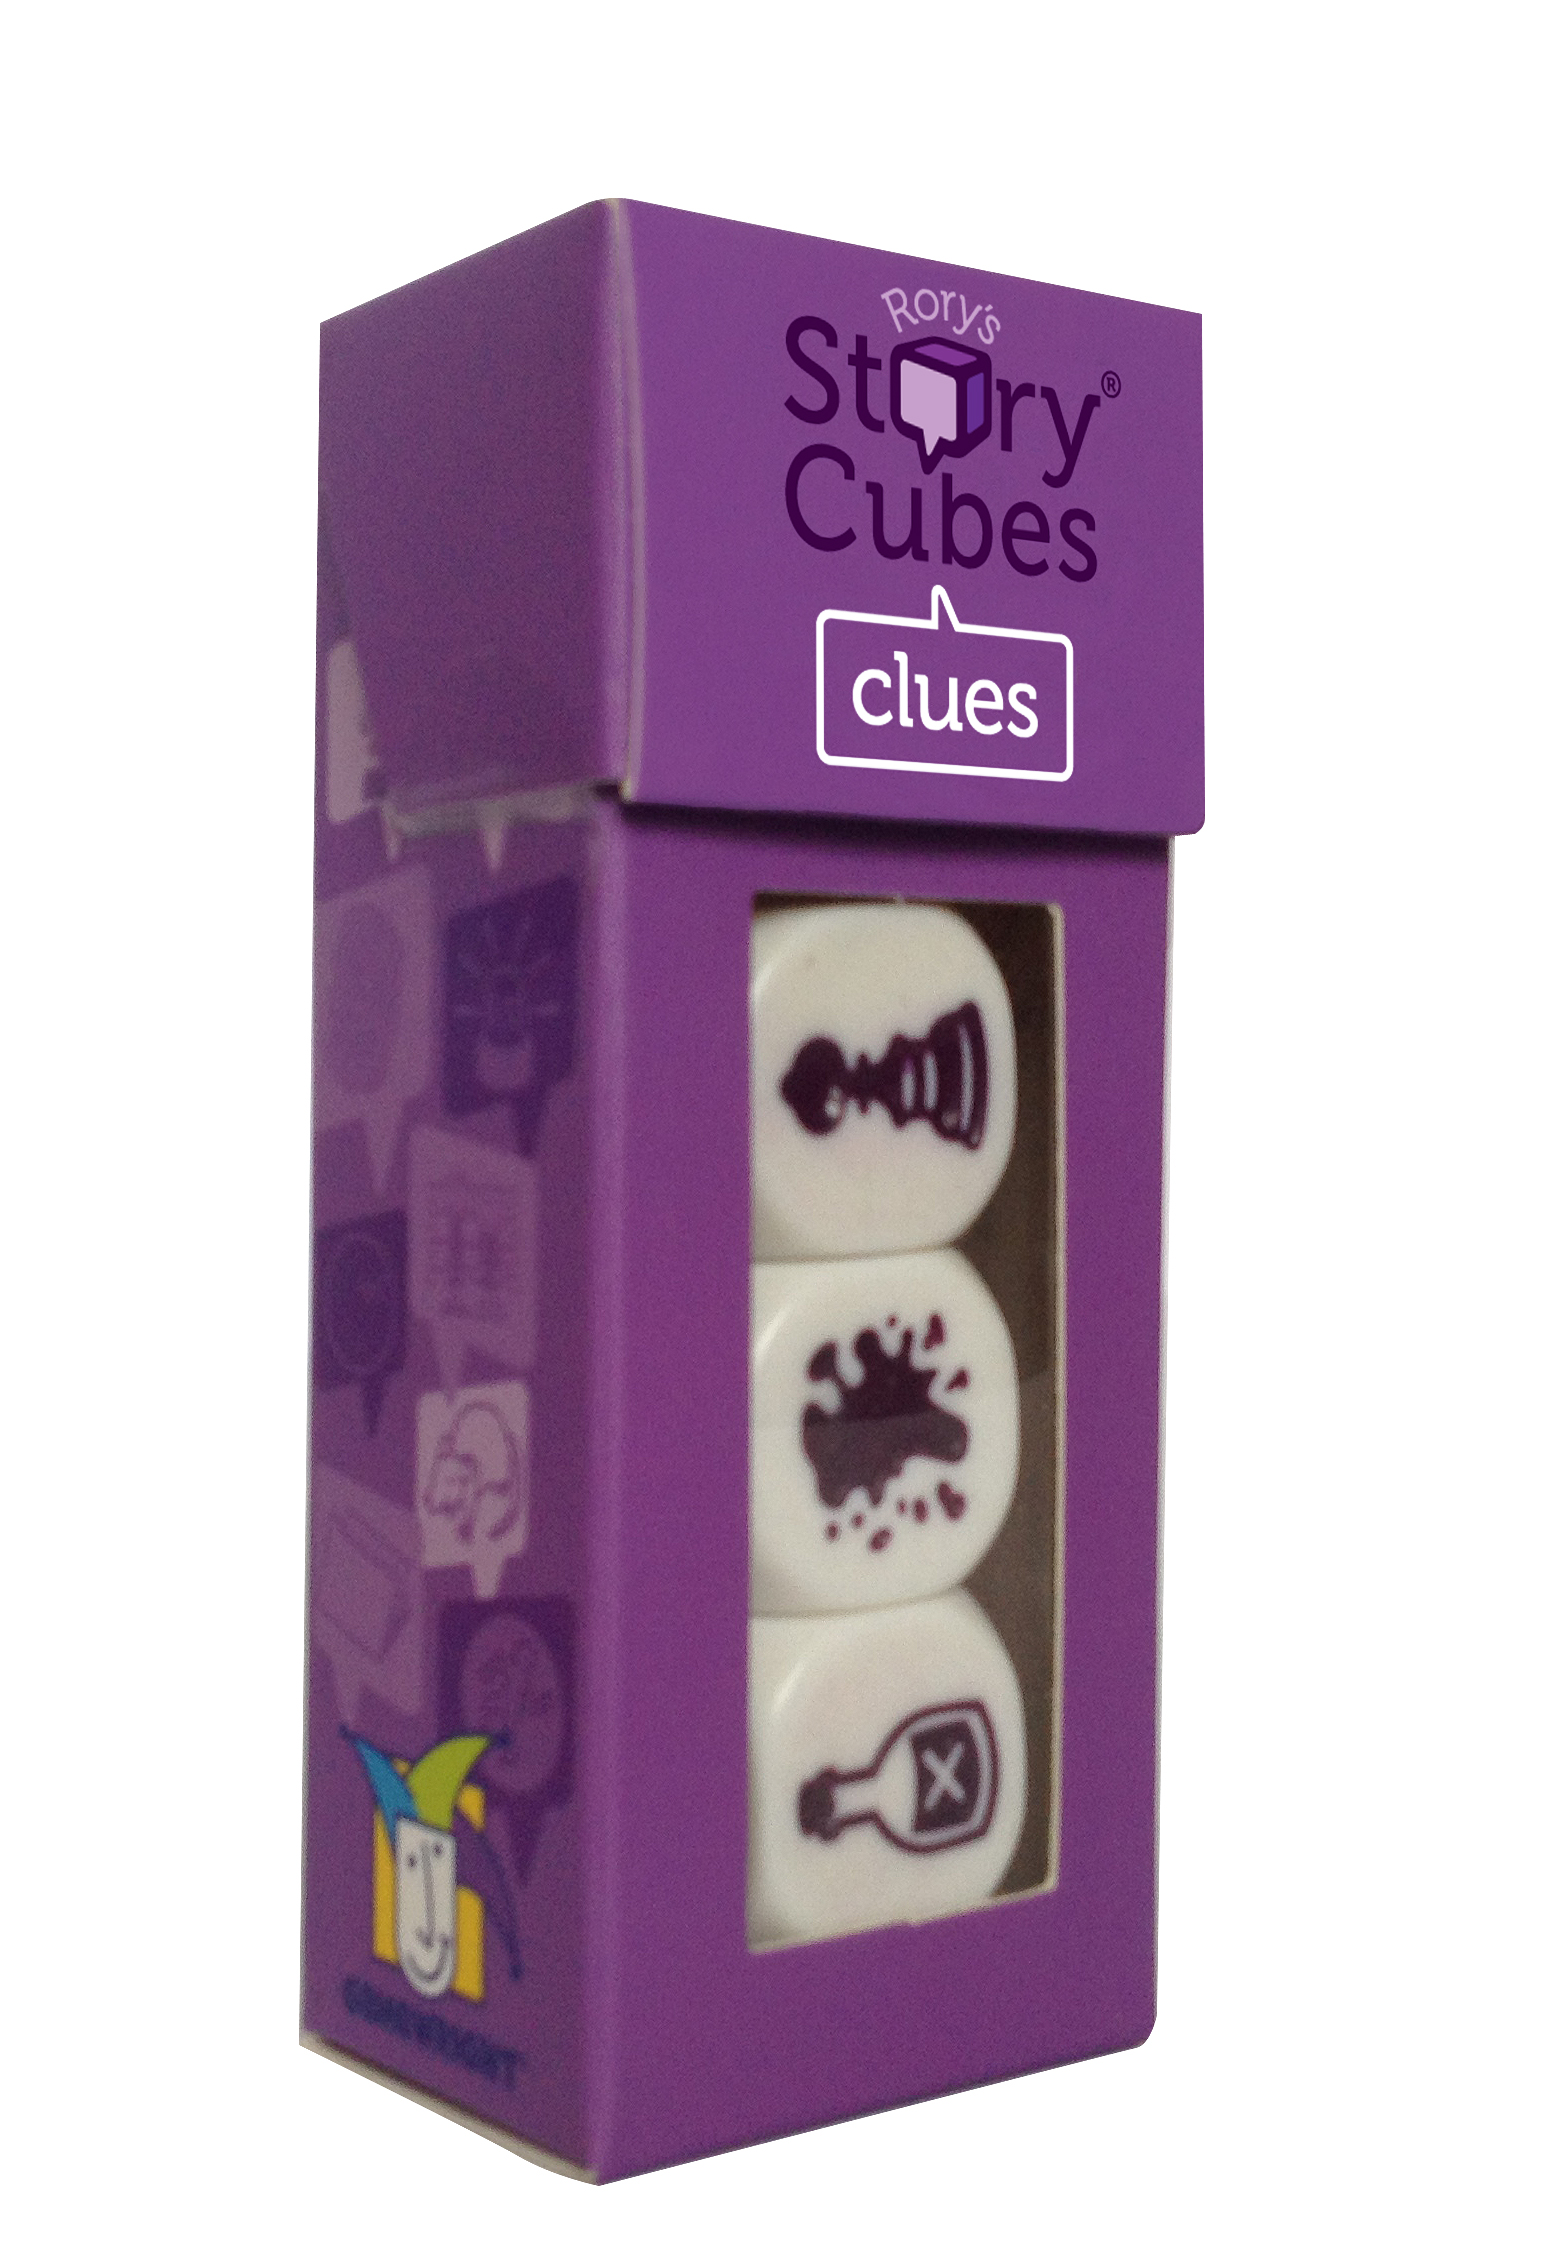 Rory039s Story CubesR Mix  Clues